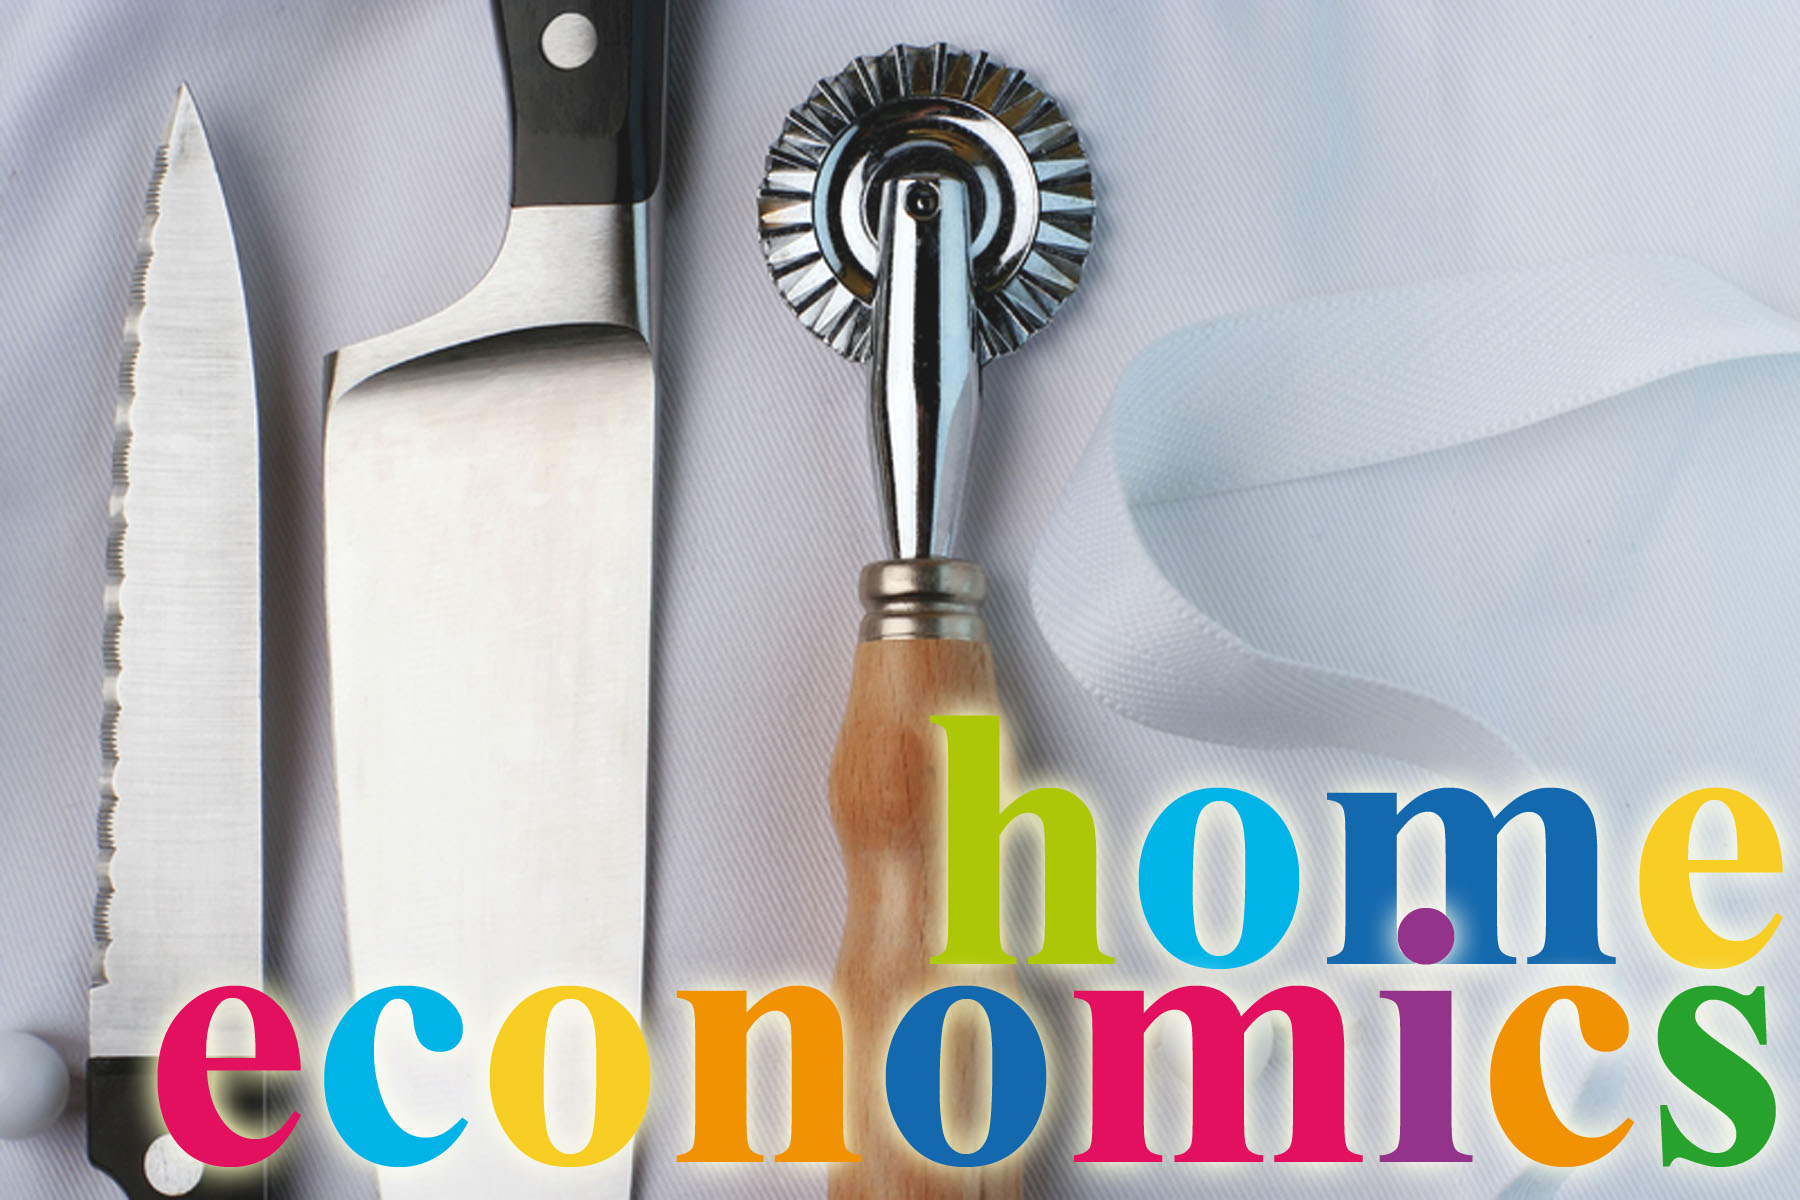 Home economics coursework journal